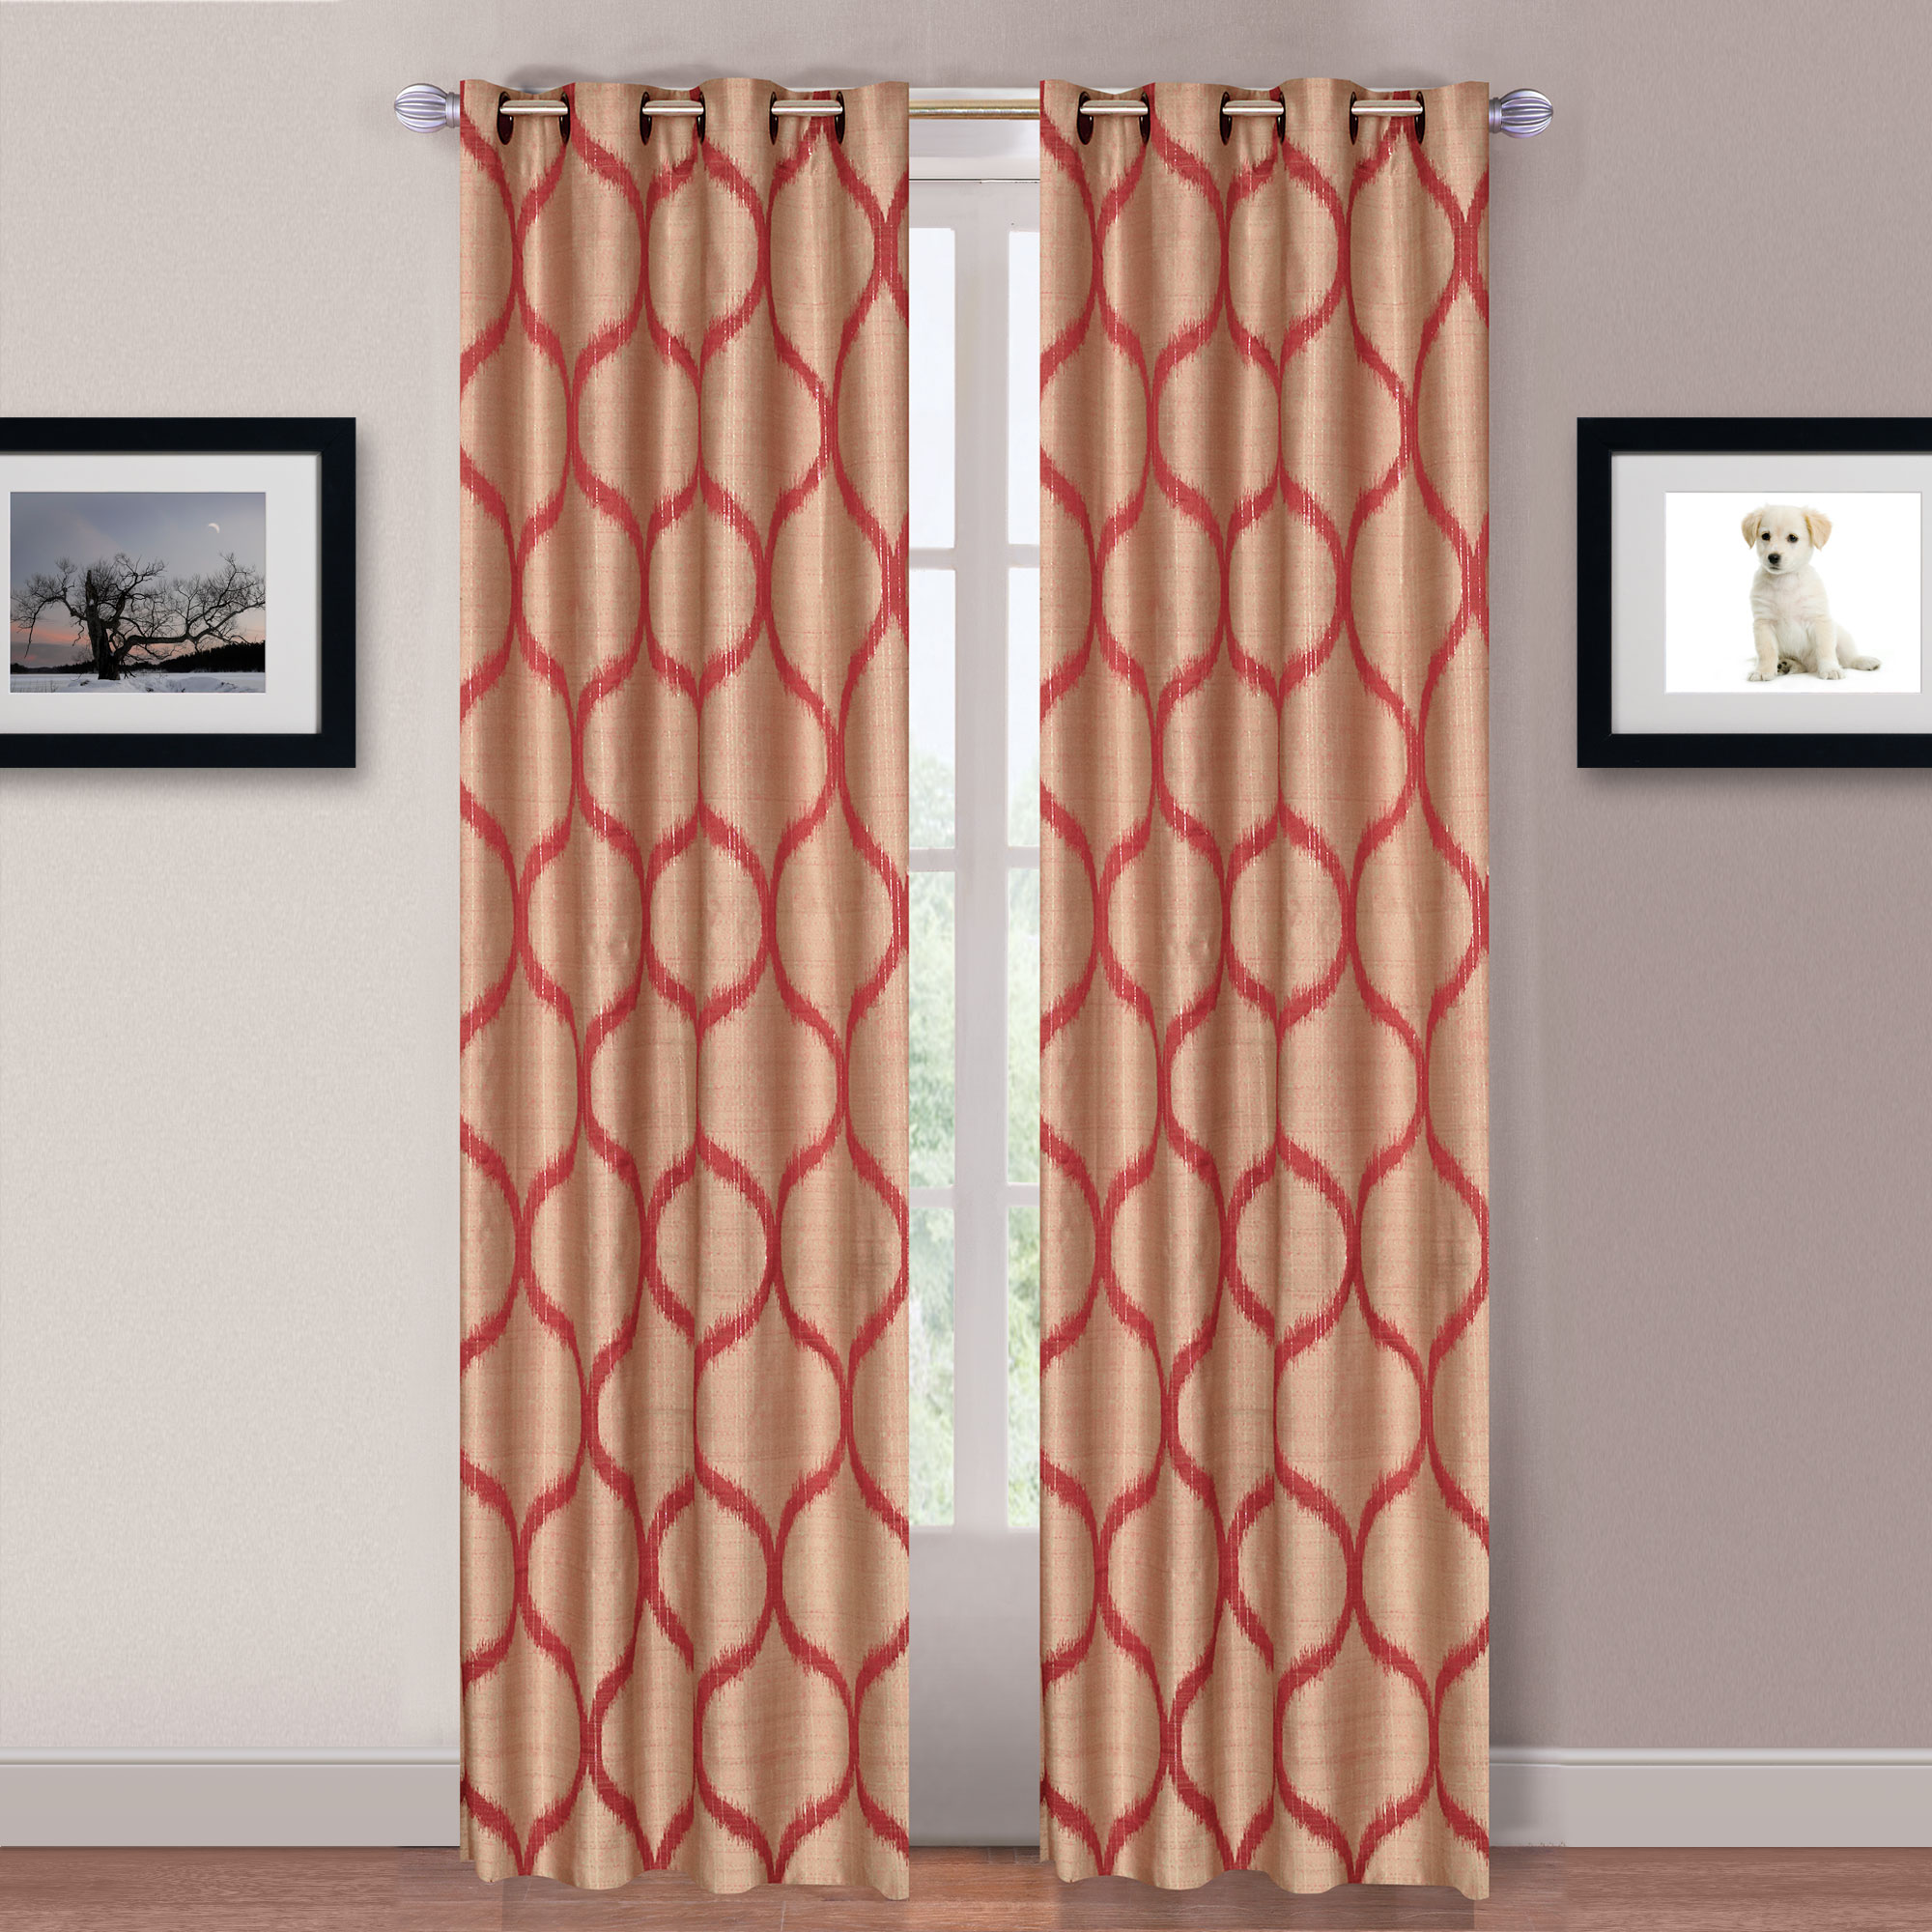 Lavish Home Metallic Grommet Curtain Panels 84 inch